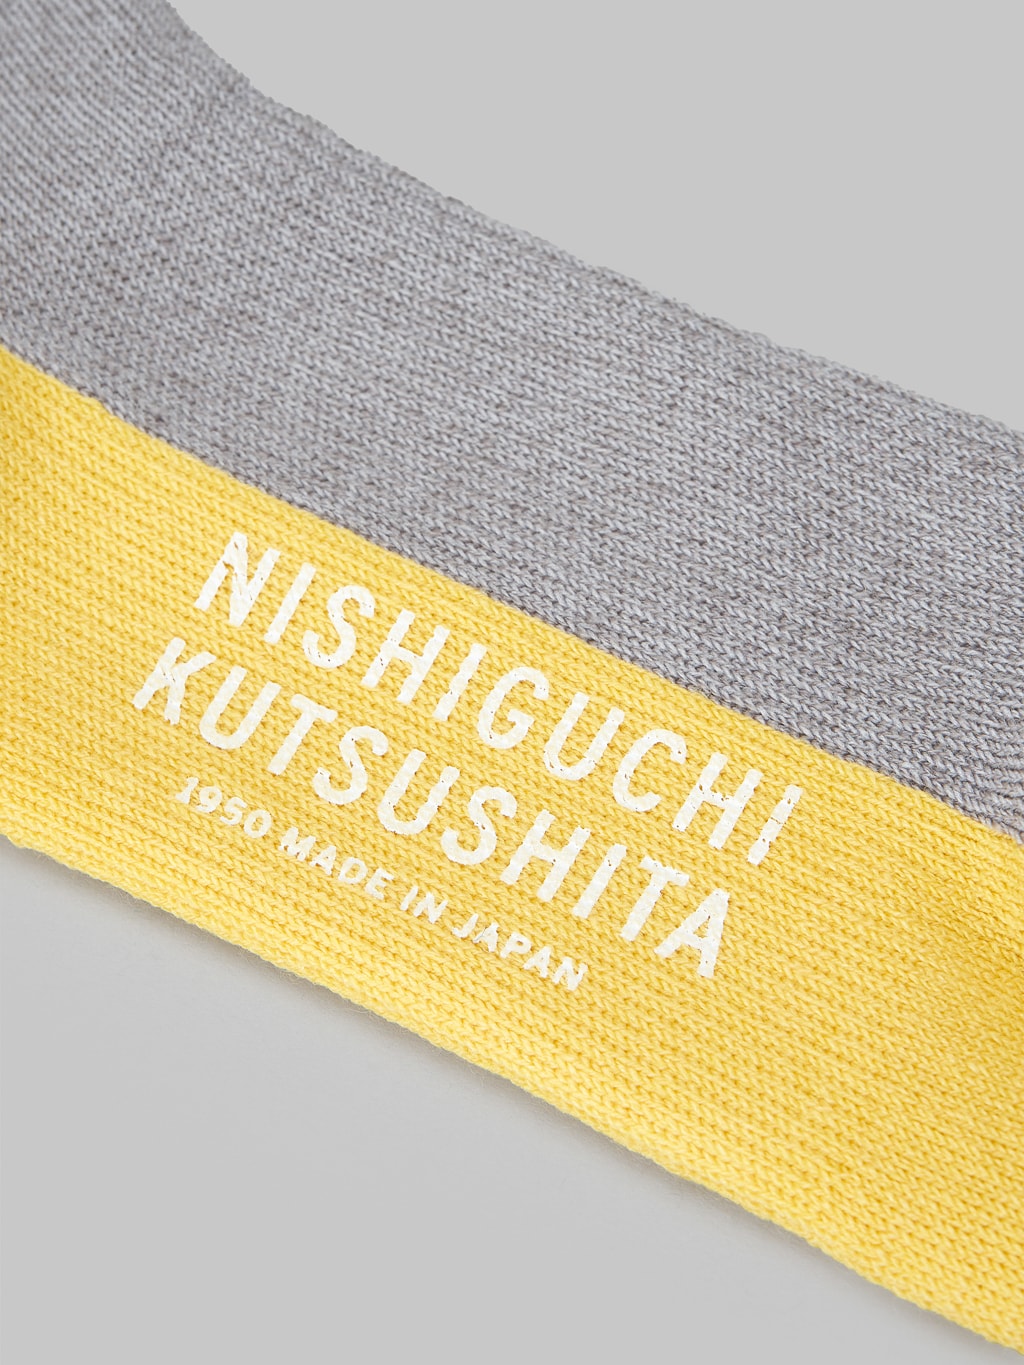 Nishiguchi Kutsushita Wool Pile Walk Socks light grey brand logo stamped